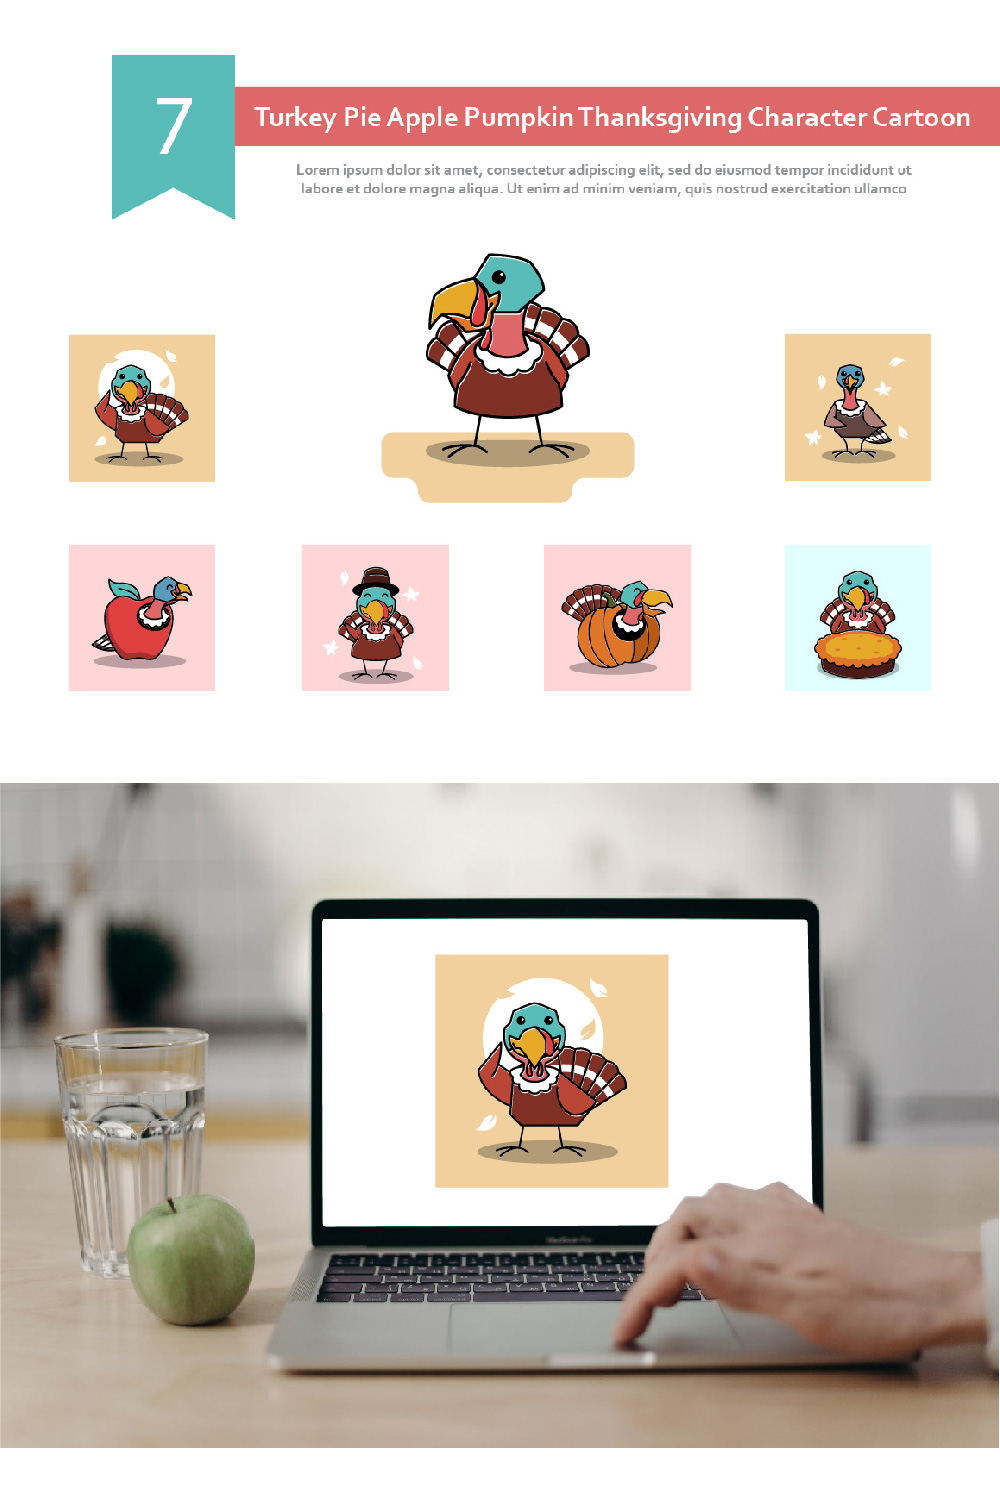 7 Turkey Pie Apple Pumpkin Thanksgiving Character Cartoon pinterest image.